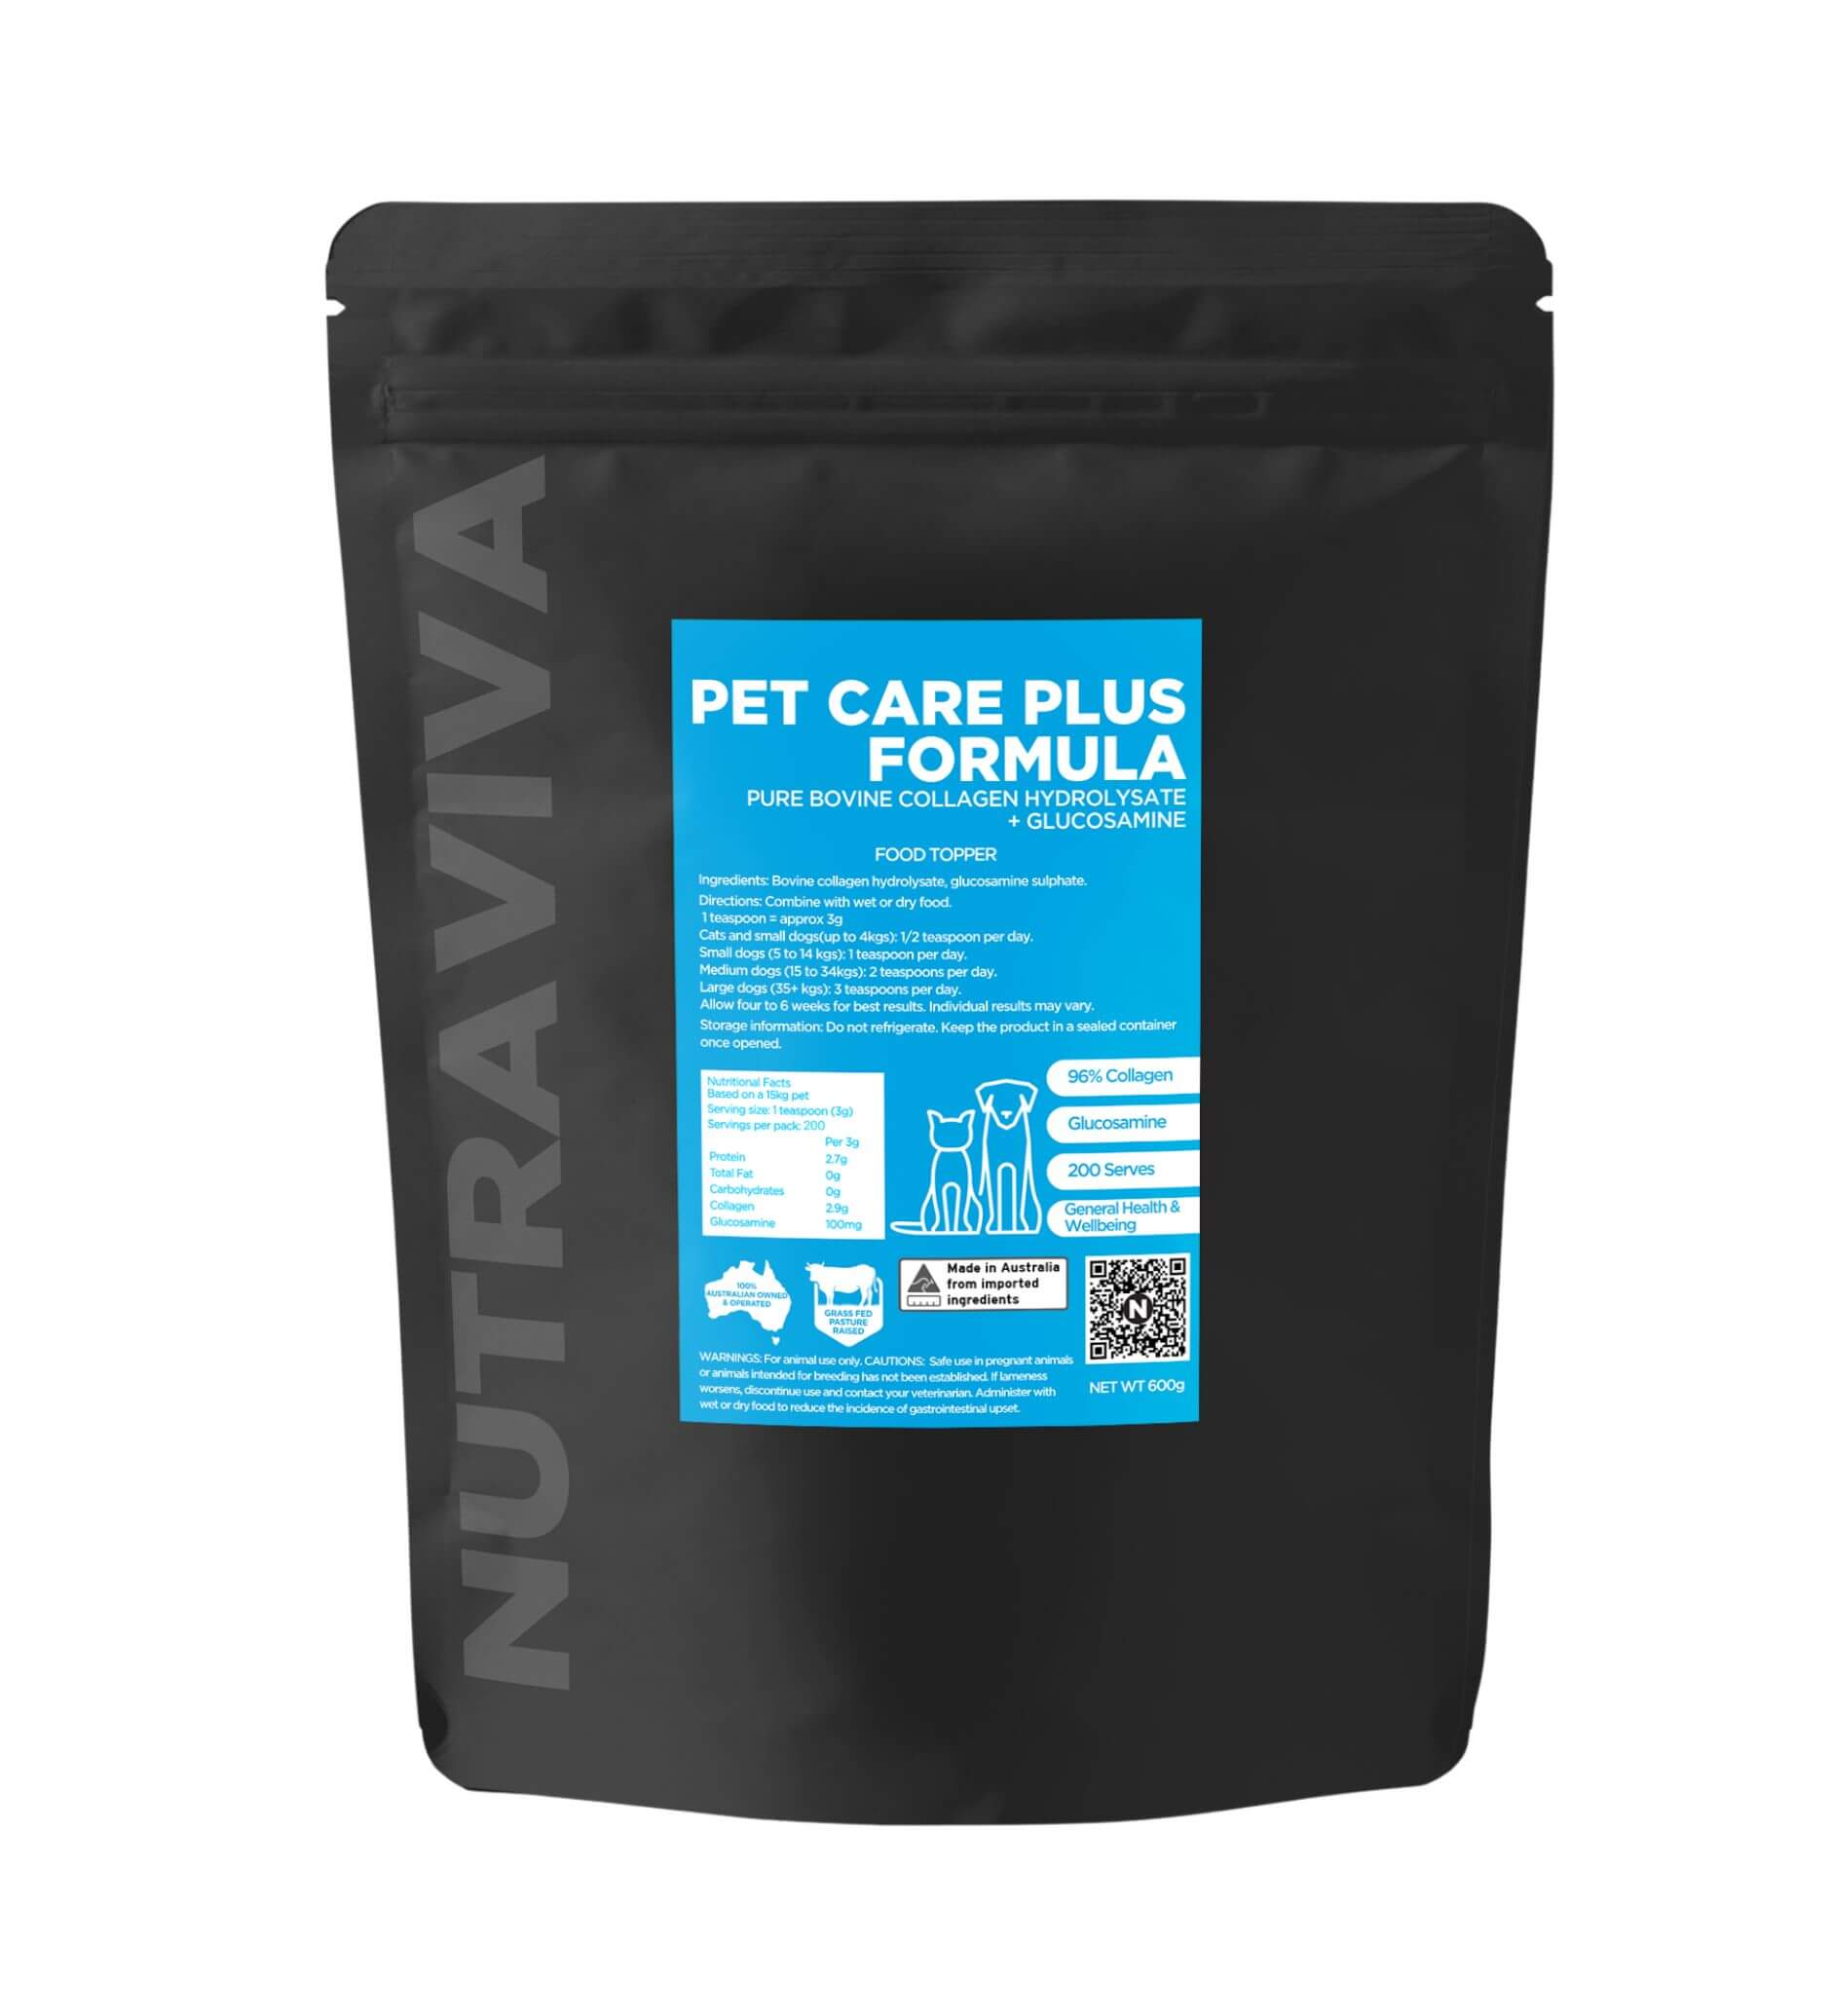 Black Label Pet Care Plus Formula 600g